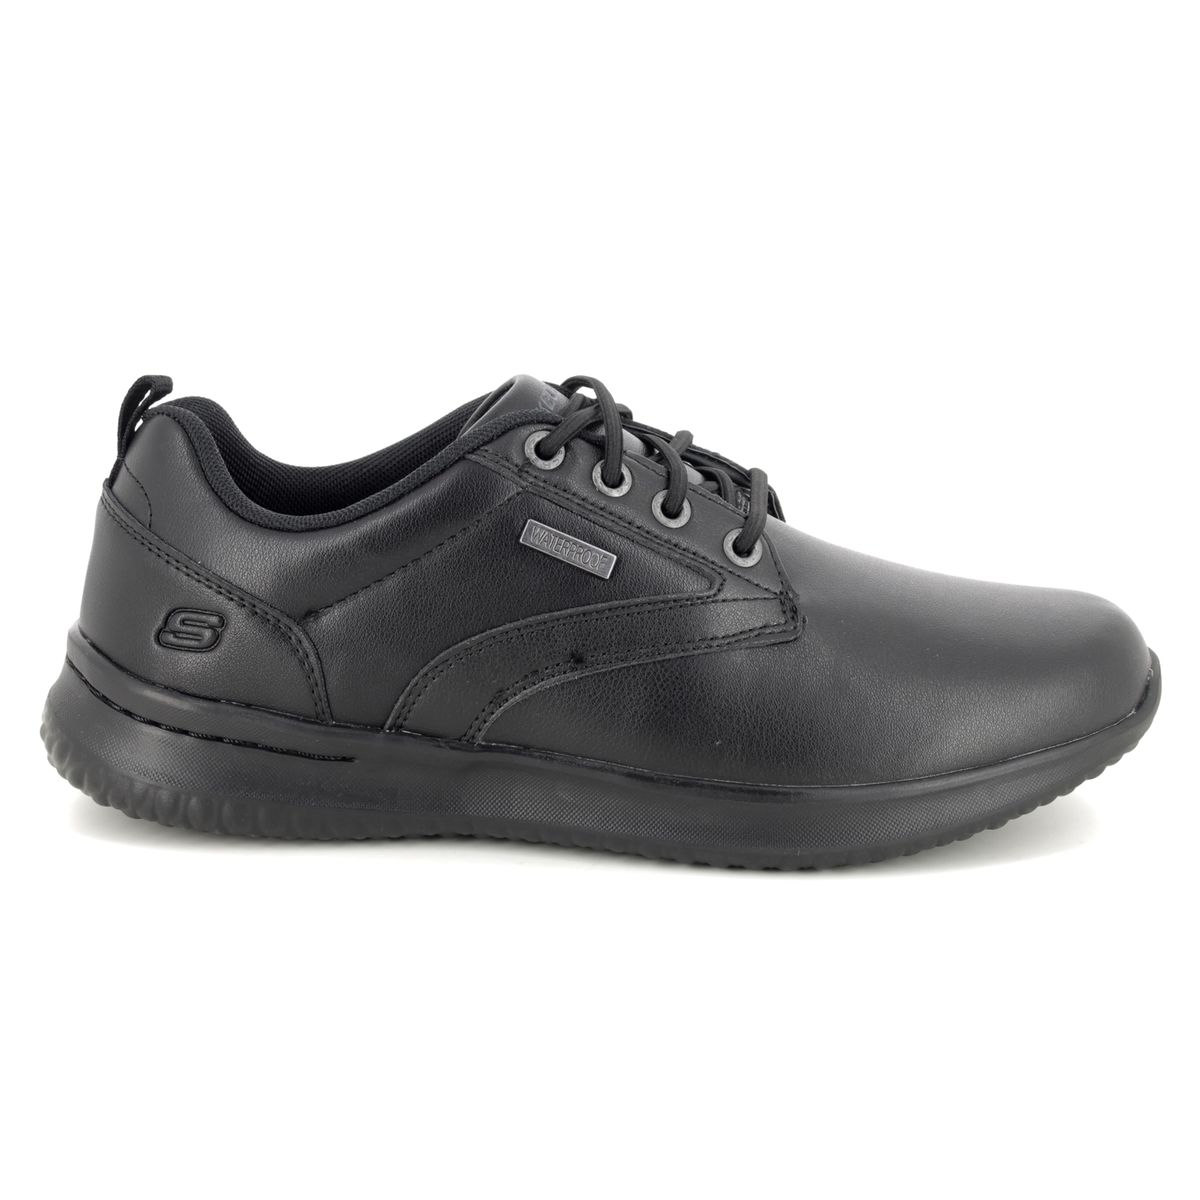 Skechers Delson Antigo 65693 BBK Black formal shoes